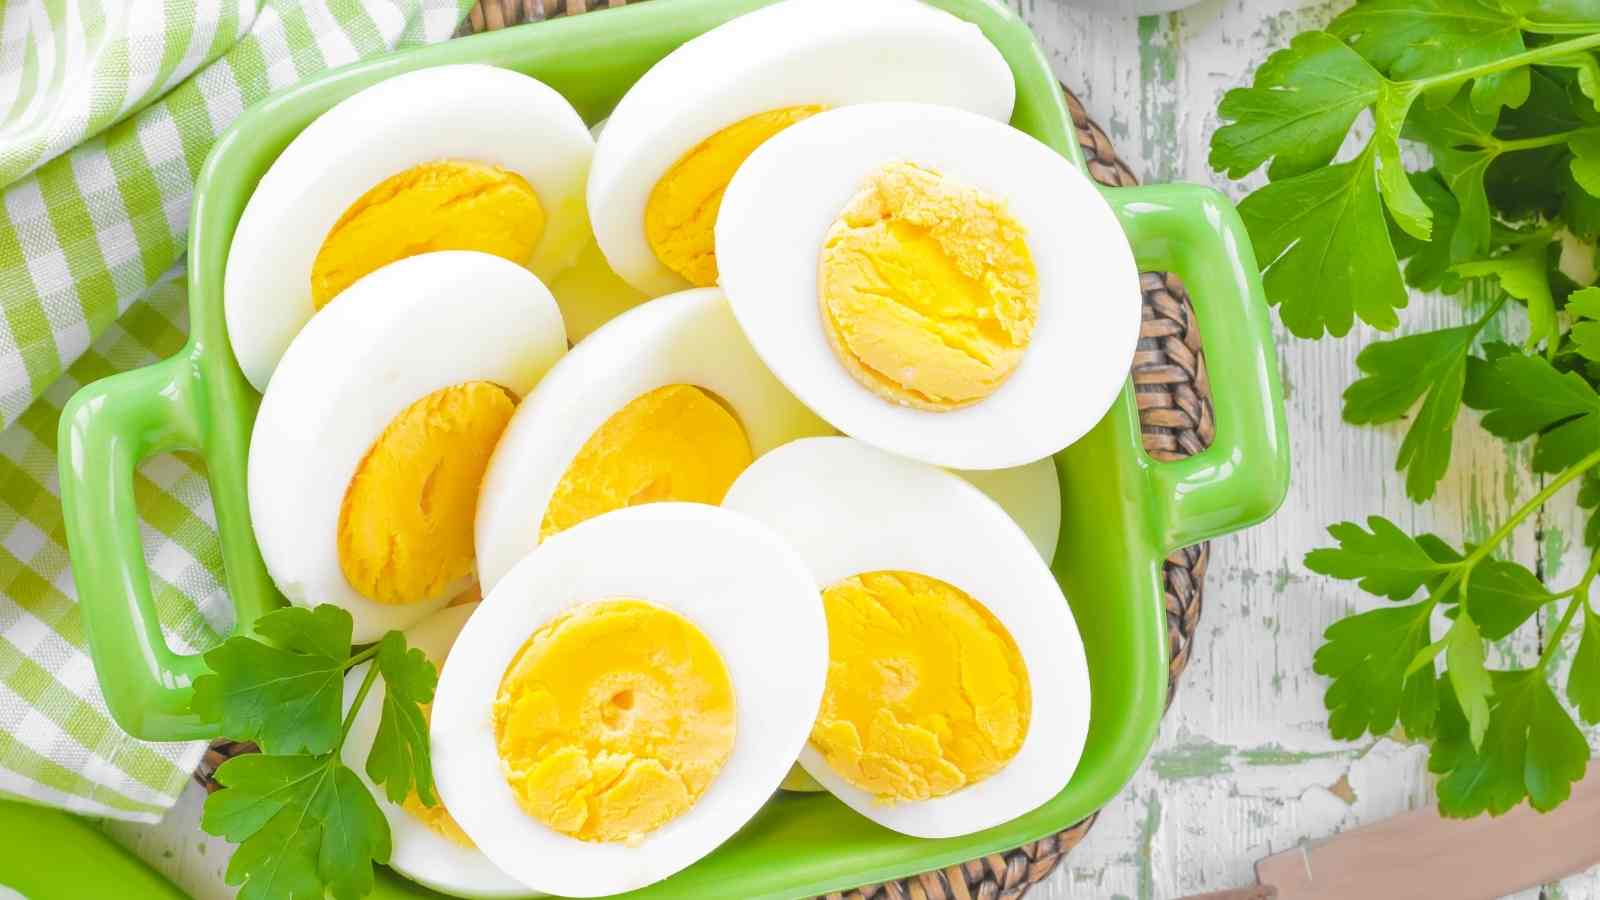 Microwave Egg Steamer – Boil & Cook